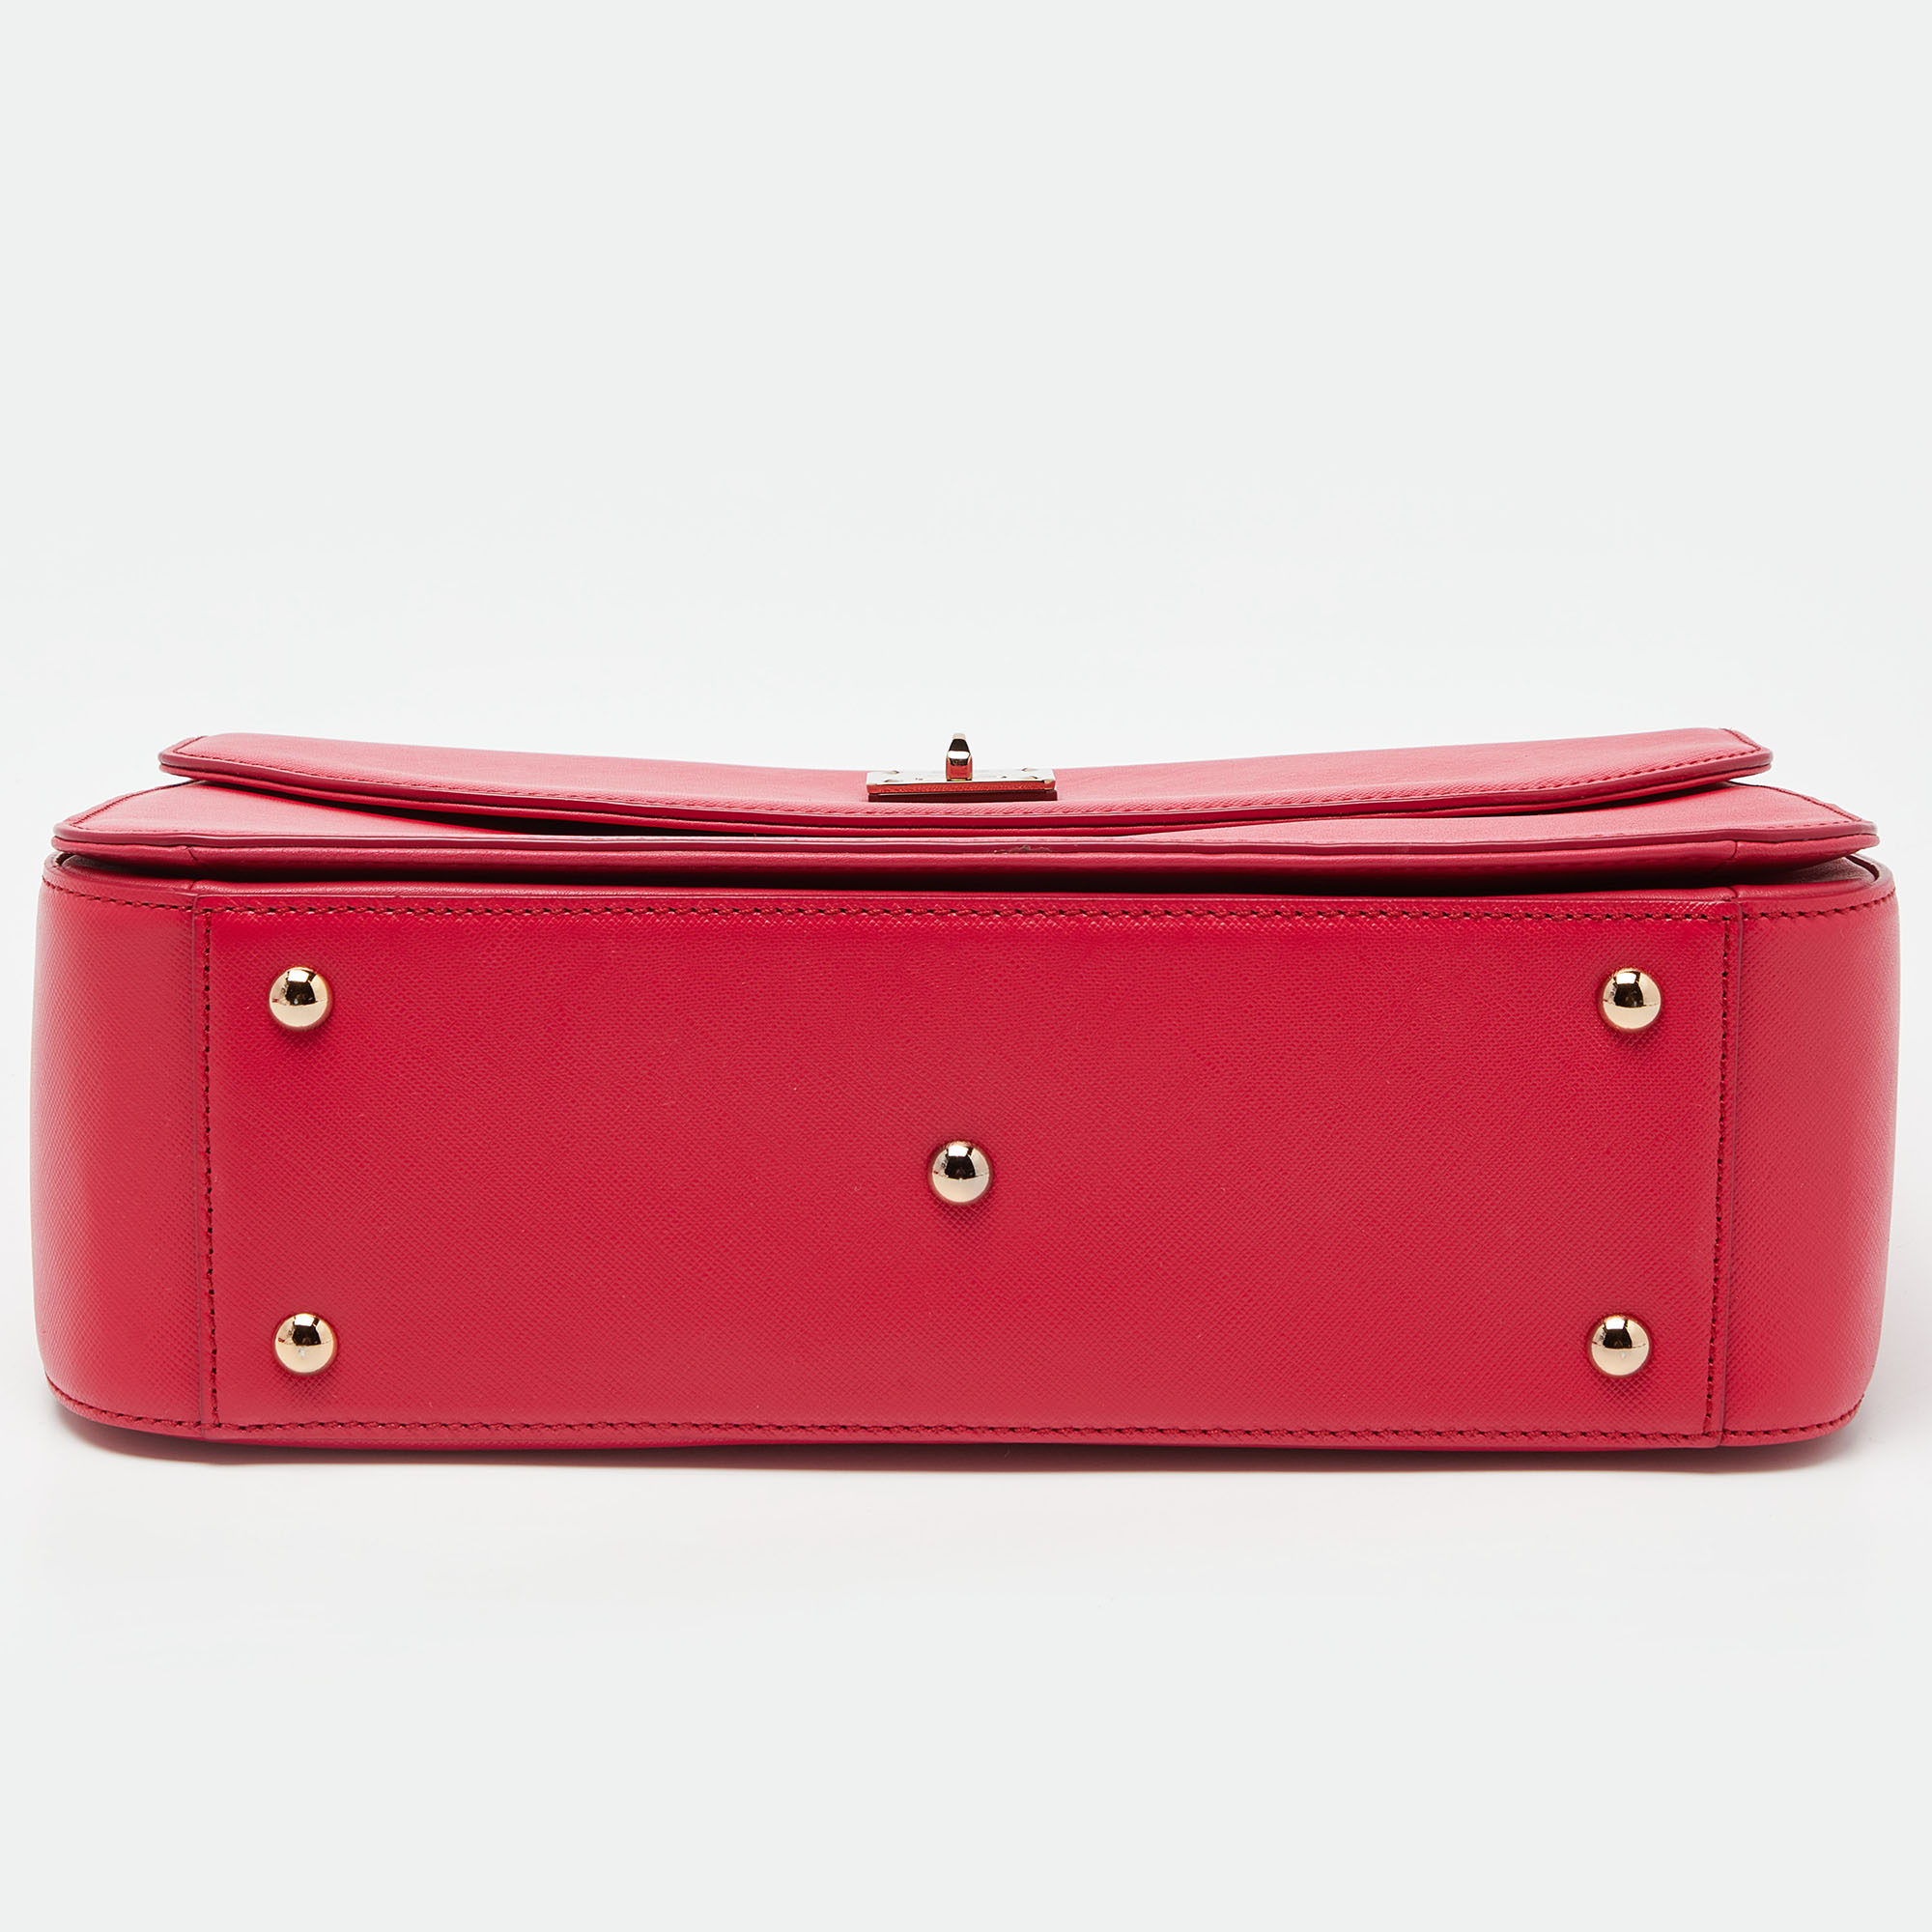 MCM Red Leather Turnlock Flap Top Handle Bag